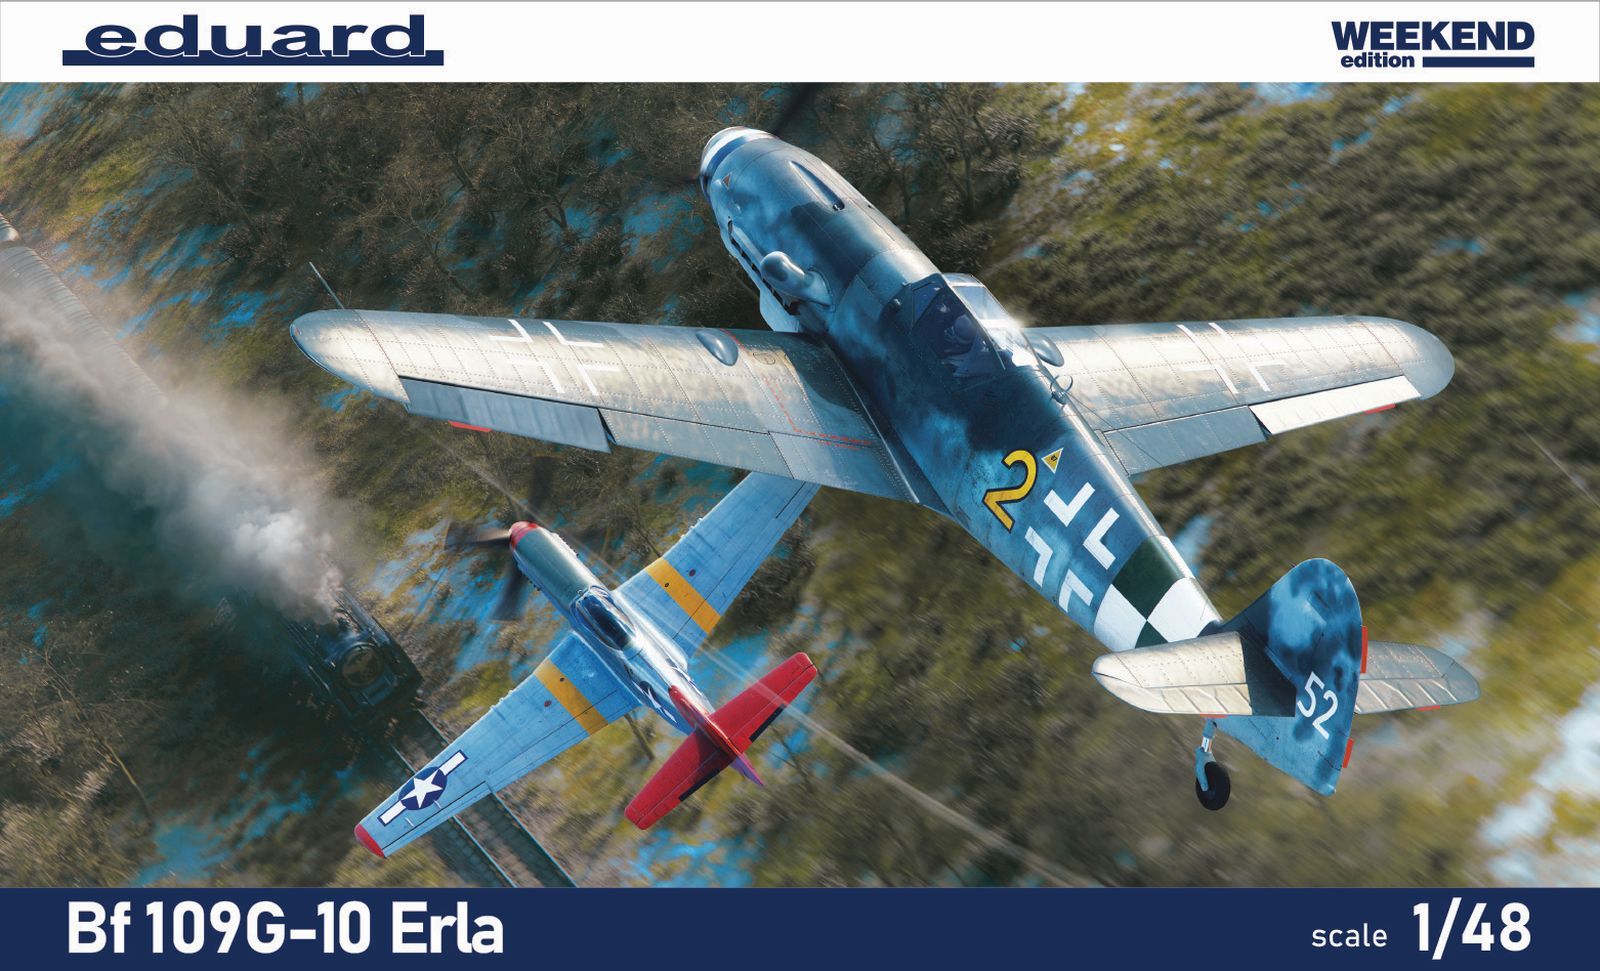 1/48 Bf 109G-10 ERLA (Weekend)